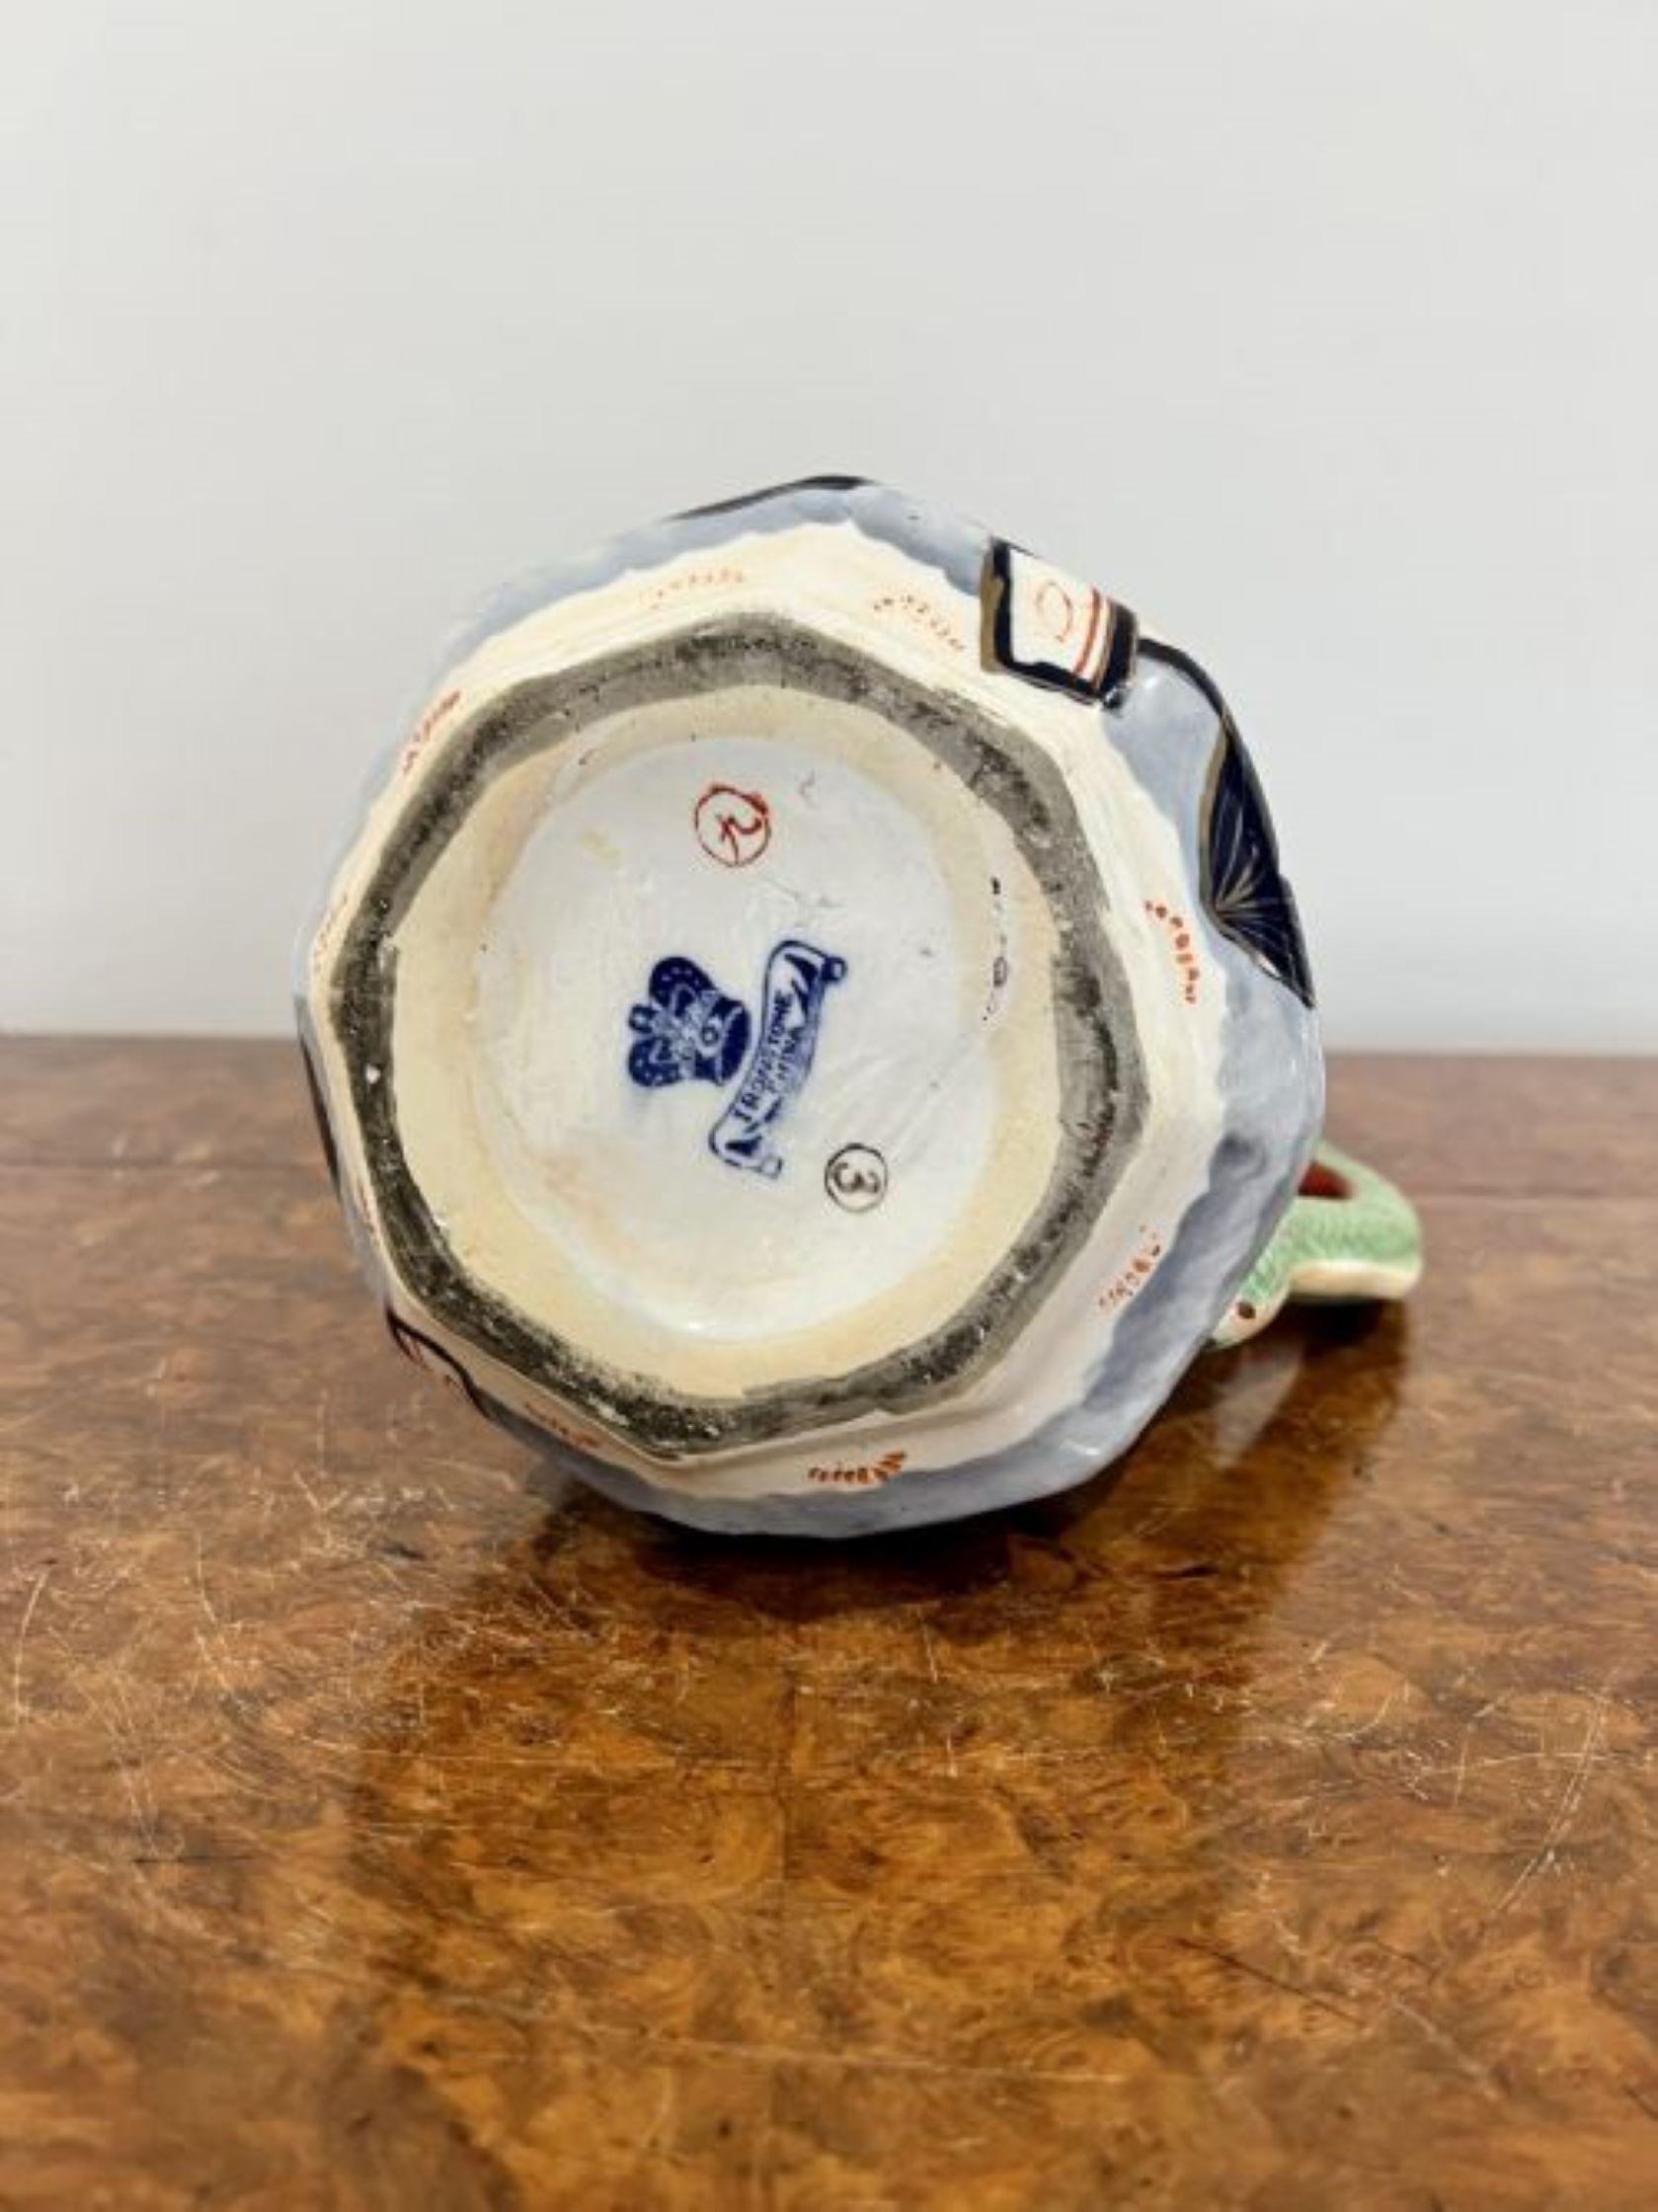 Antique Victorian quality masons ironstone jug and bowl set having a quality matching masons ironstone jug and bowl set in wonderful orange, green, red and white colours 
Jug H21.5cm W16cm D23cm
Bowl H9cm W29cm D29cm